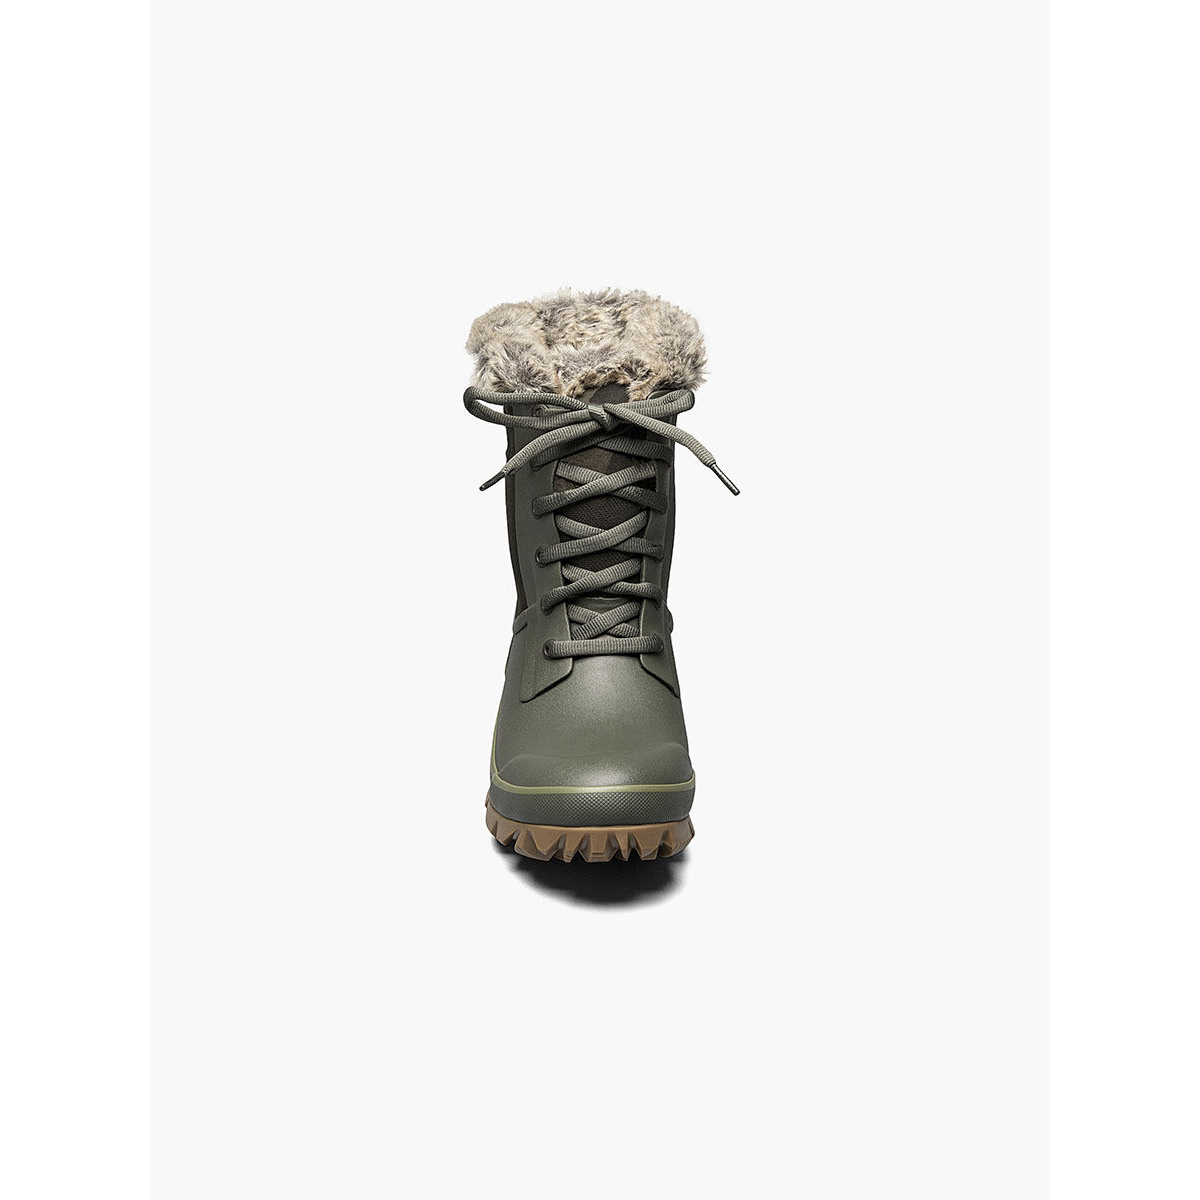 BOGS Women's Arcata Tontal Camo Waterproof Lace Up Snow Boots Dark Green - 72693-301 - Dark Green, 9